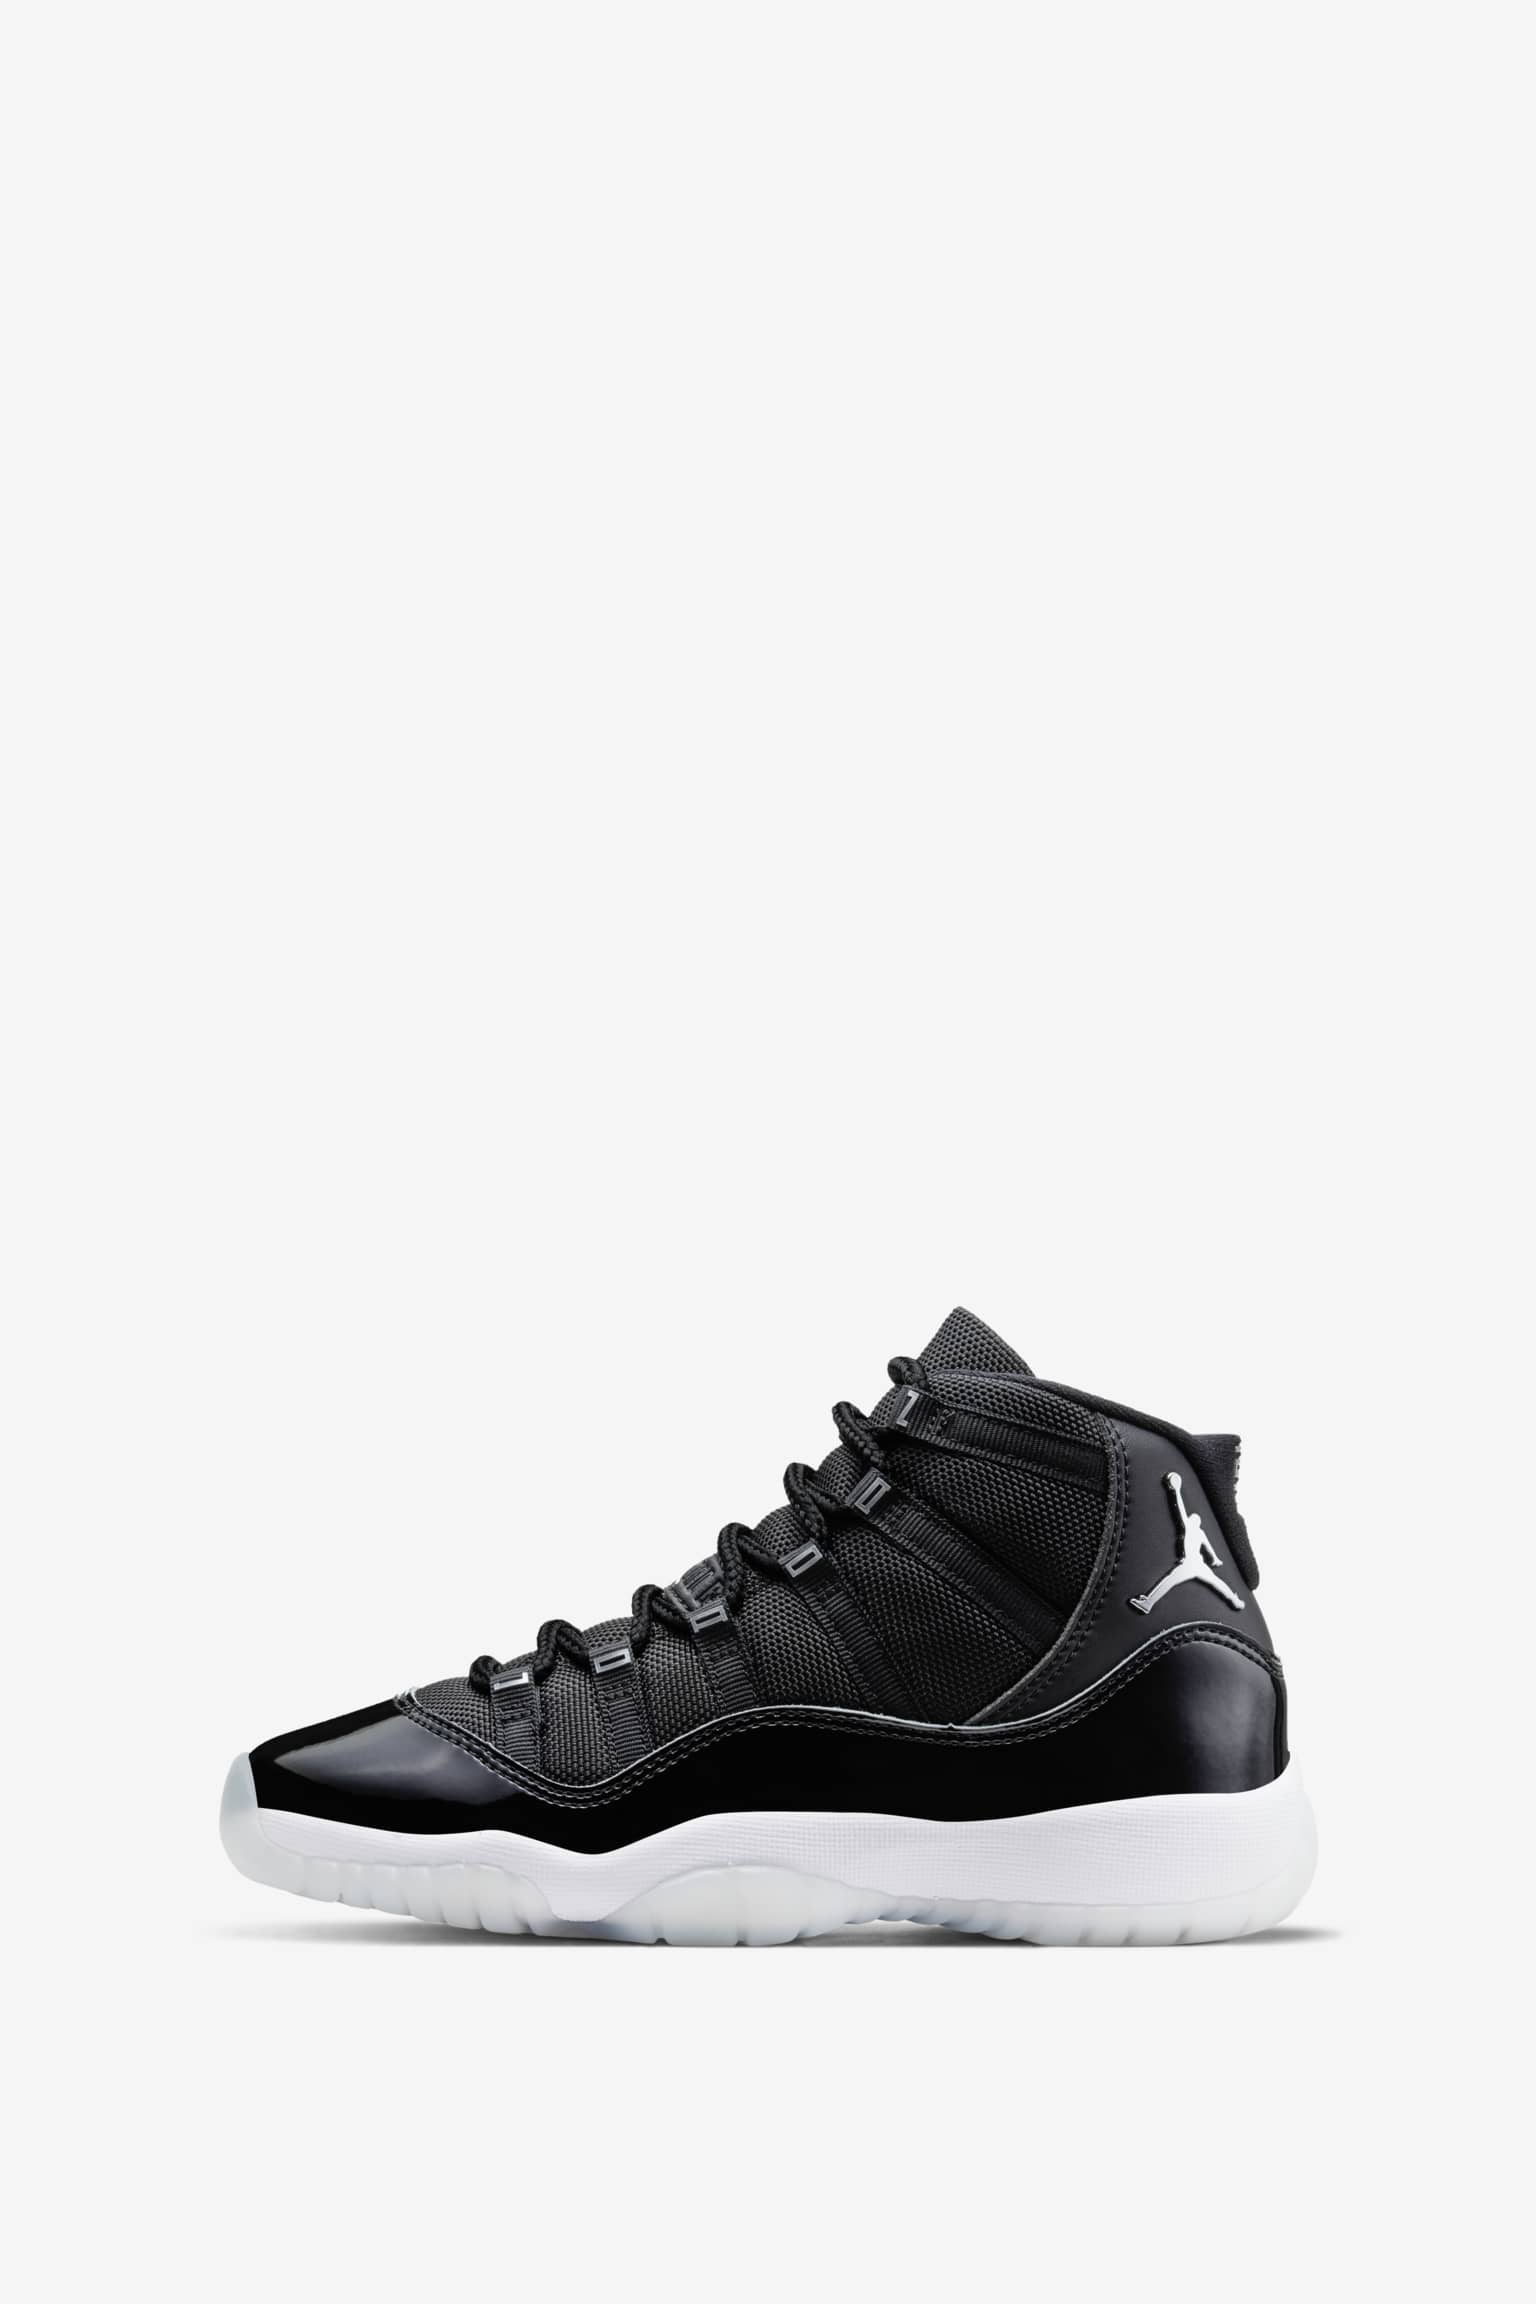 Air Jordan 11 'Jubilee' Release Date. Nike SNKRS CA